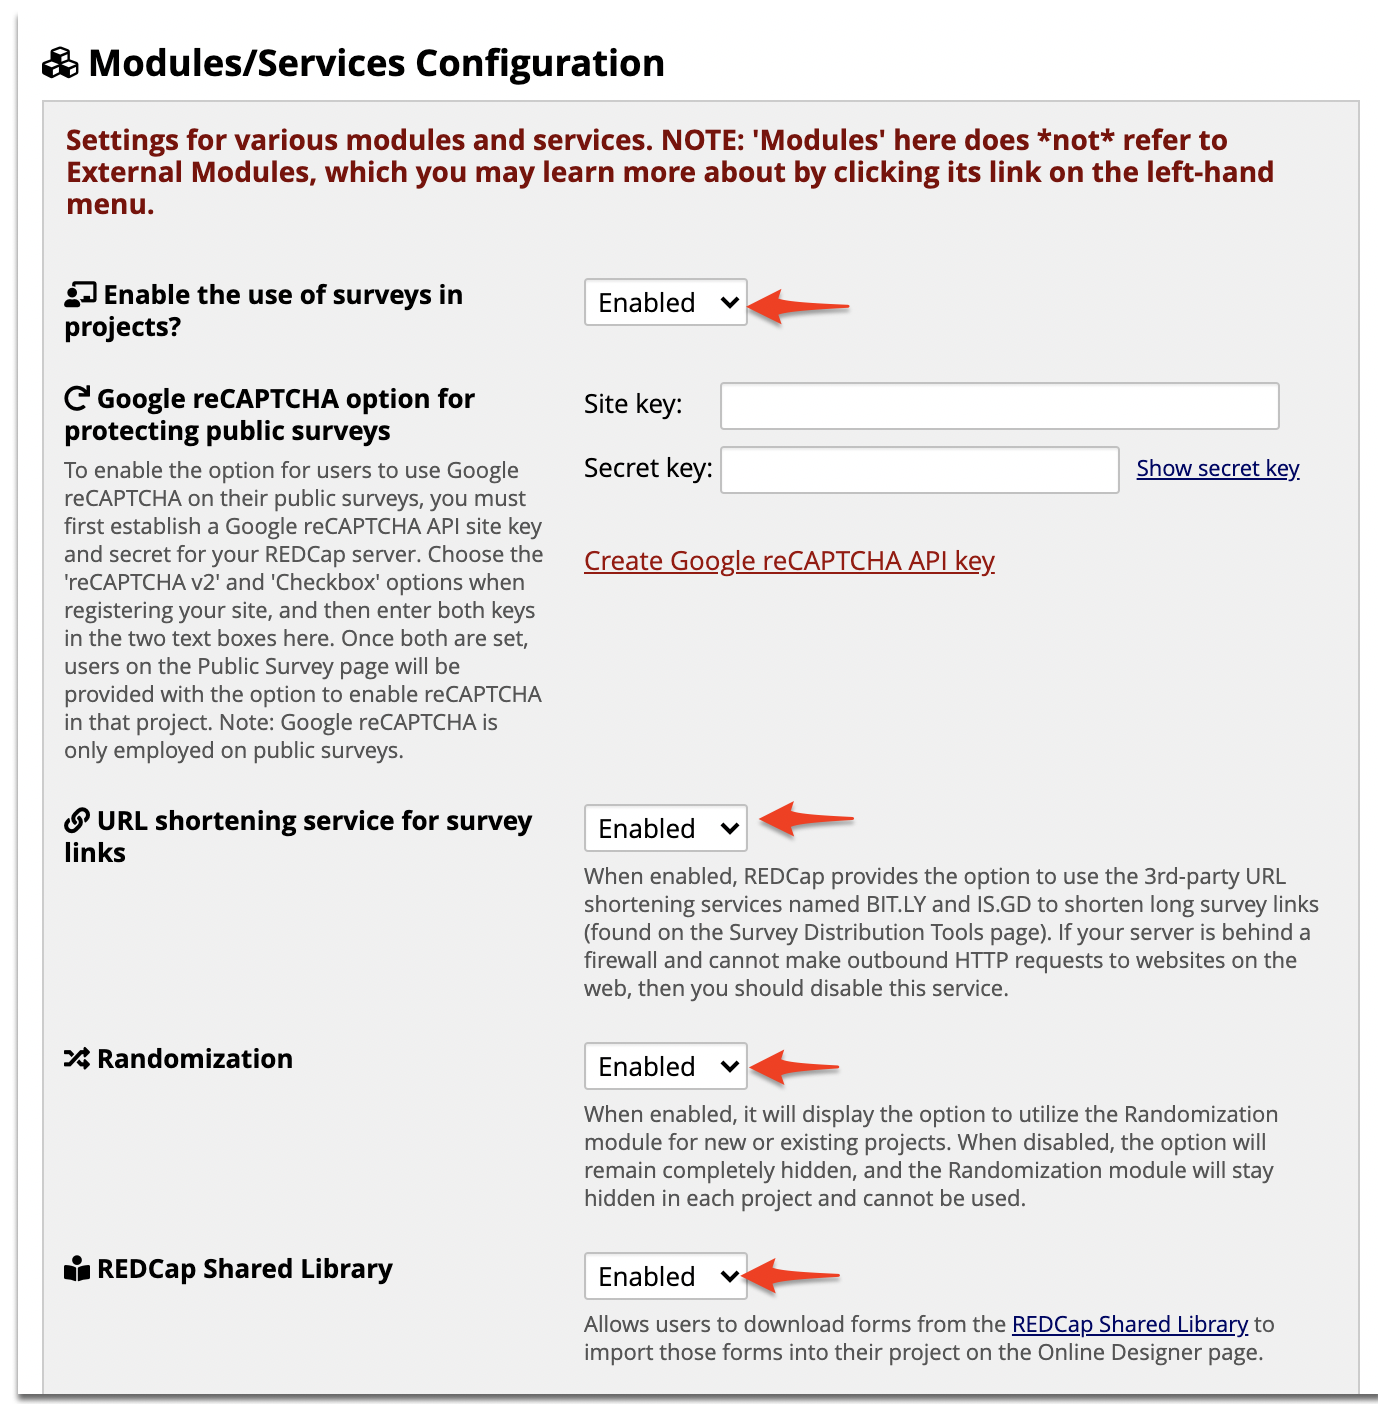 Modules/Services Configuration